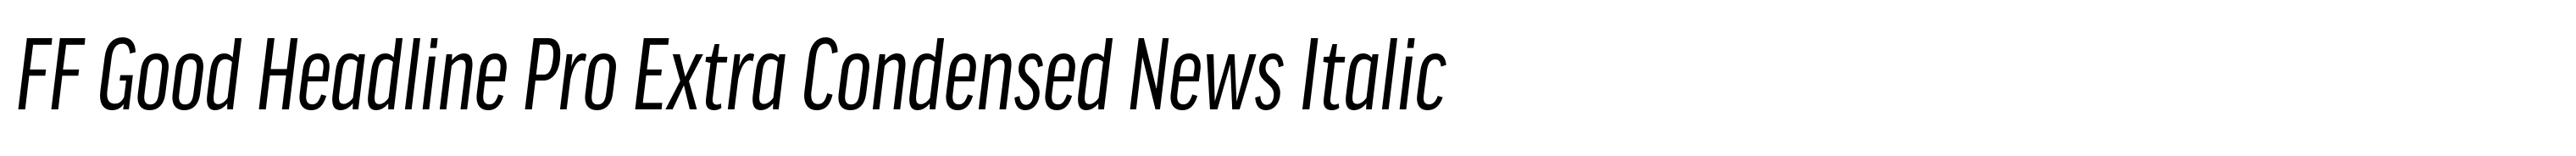 FF Good Headline Pro Extra Condensed News Italic